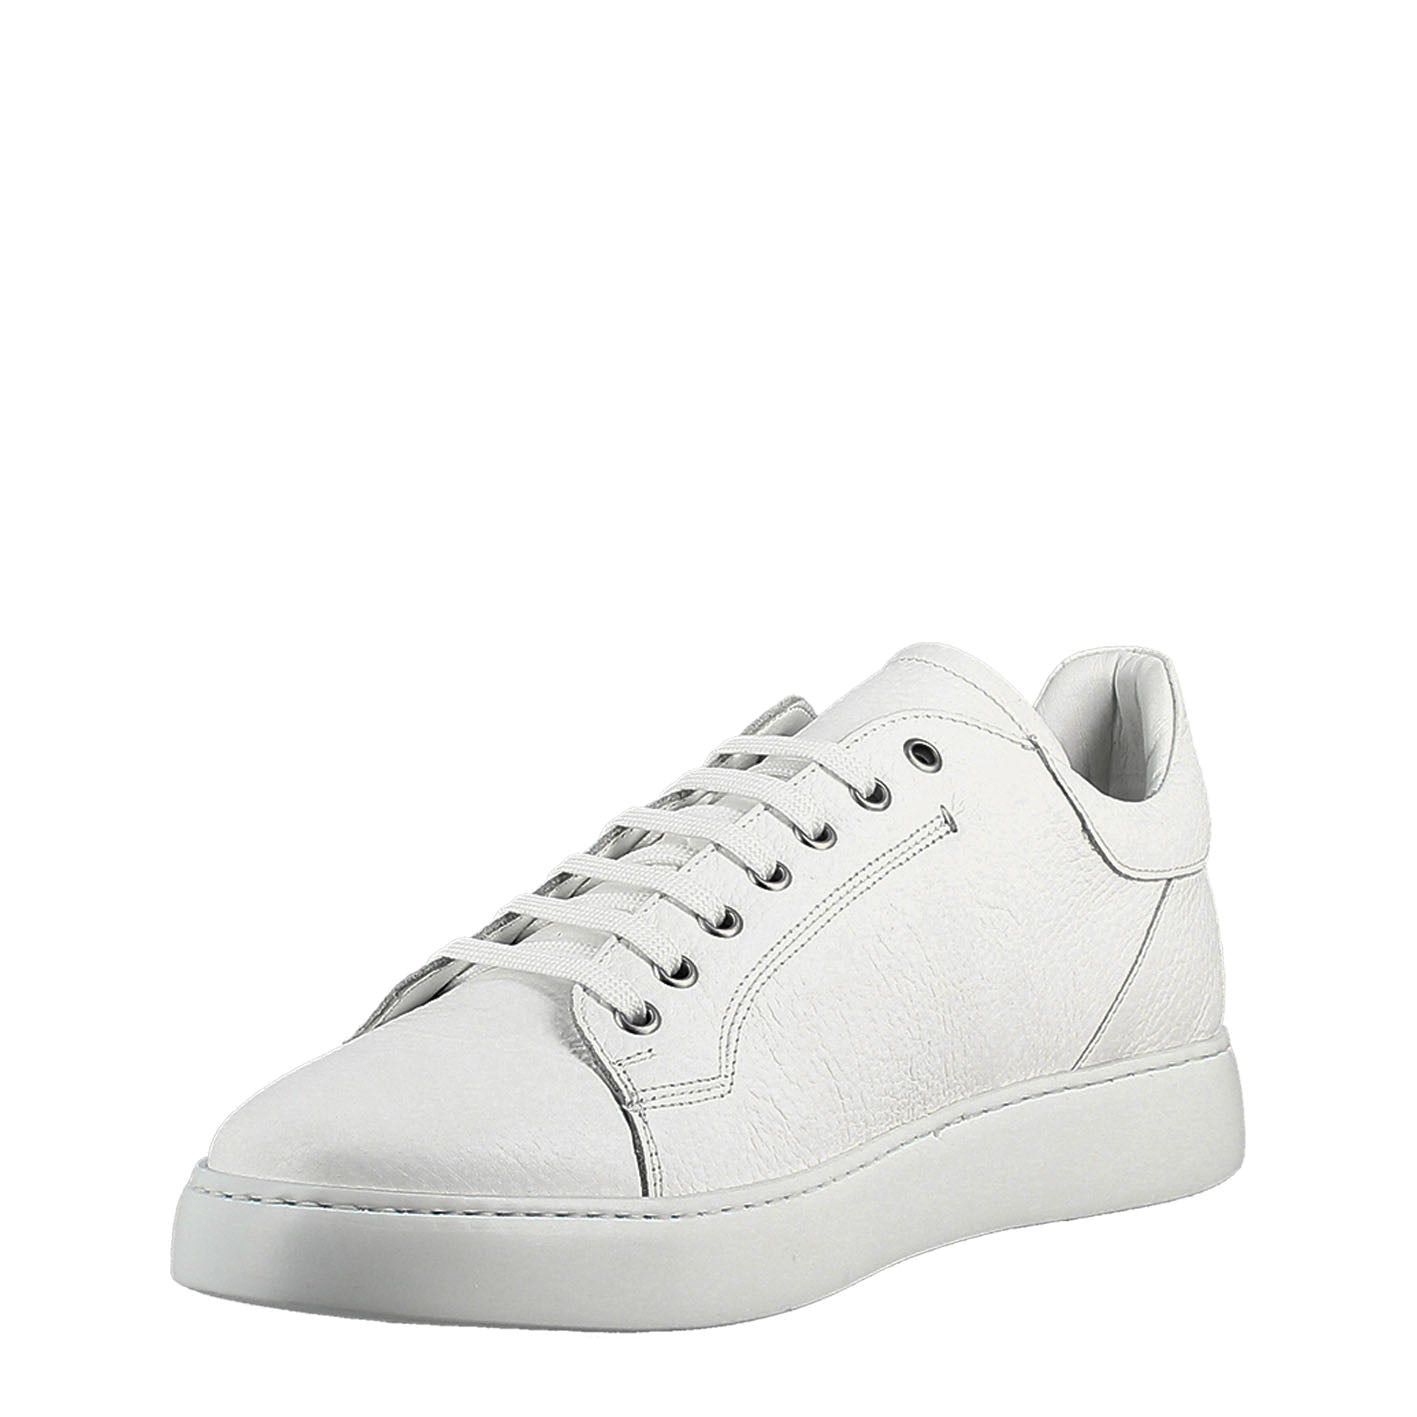 Sneaker bianca elegante da uomo in pelle liscia - LeonardoShoes